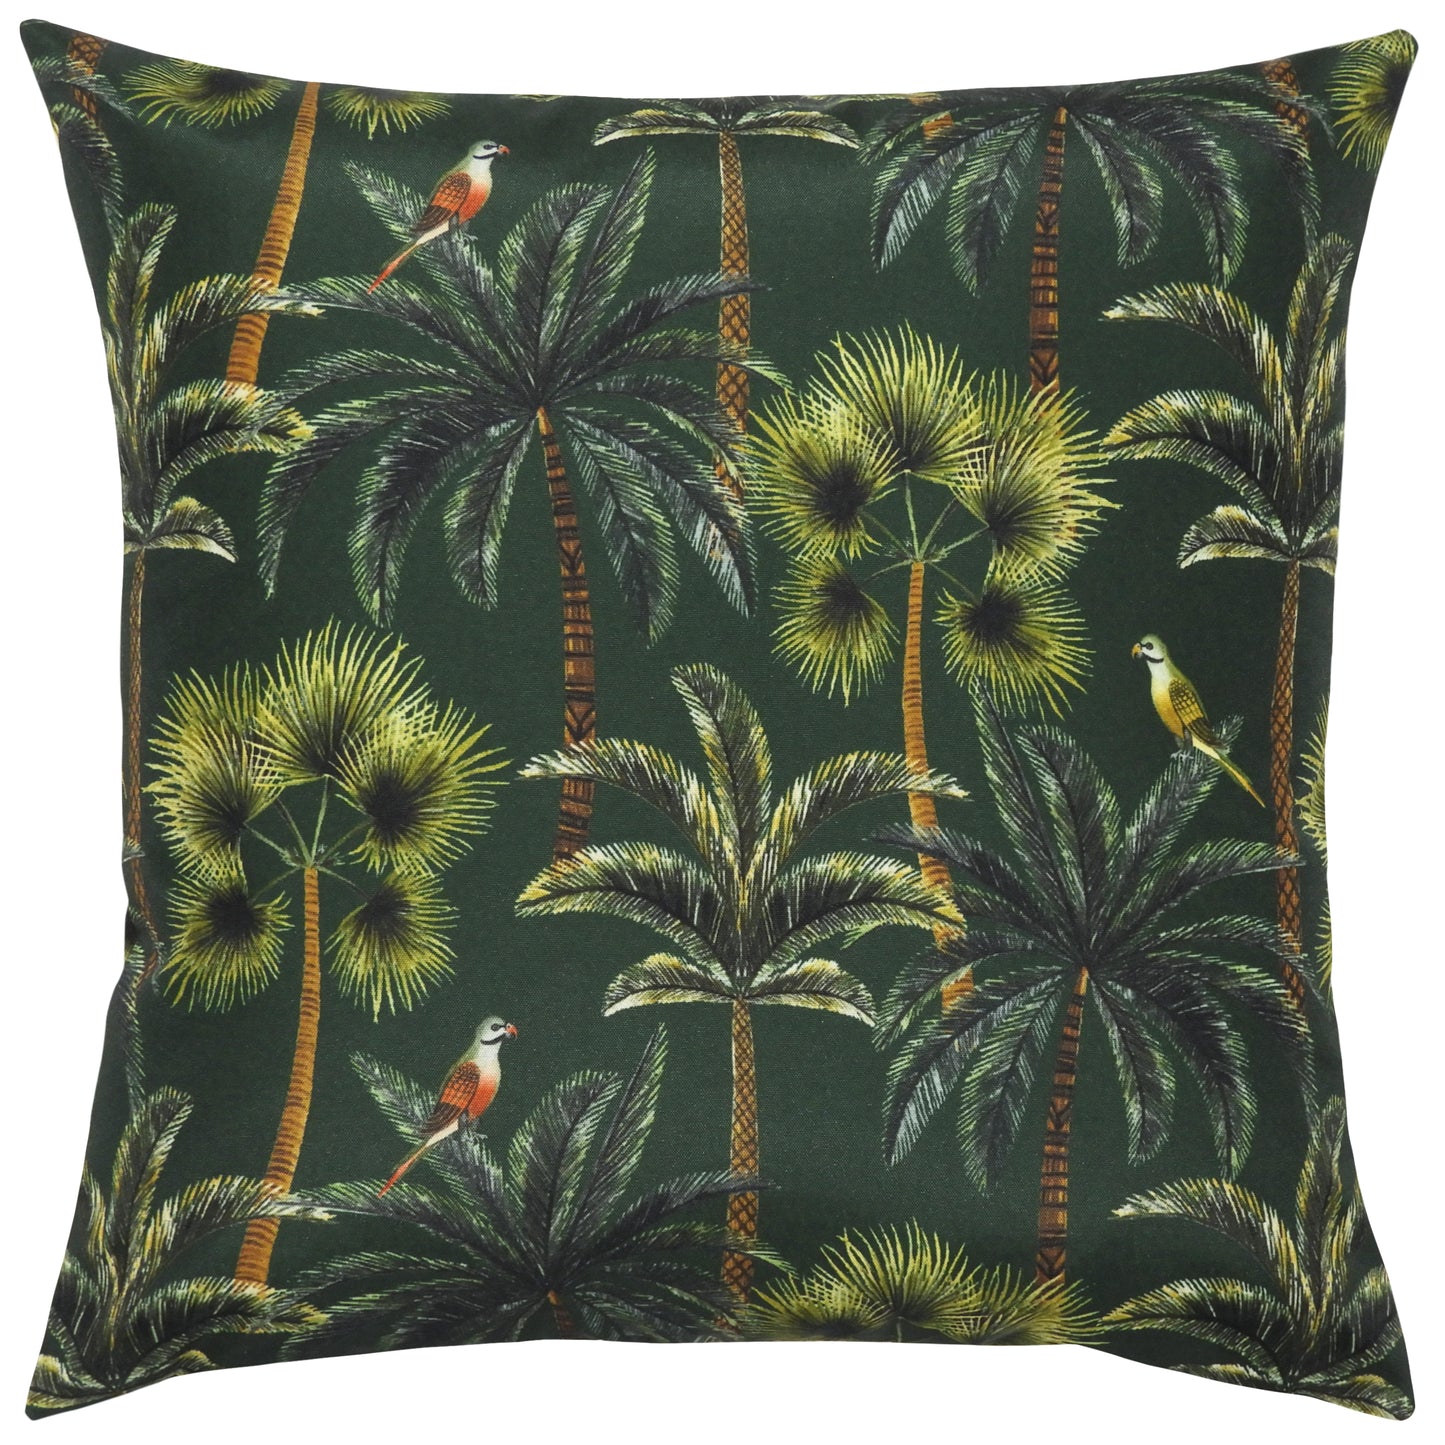 Decorative Outdoor Cushion "Palms"